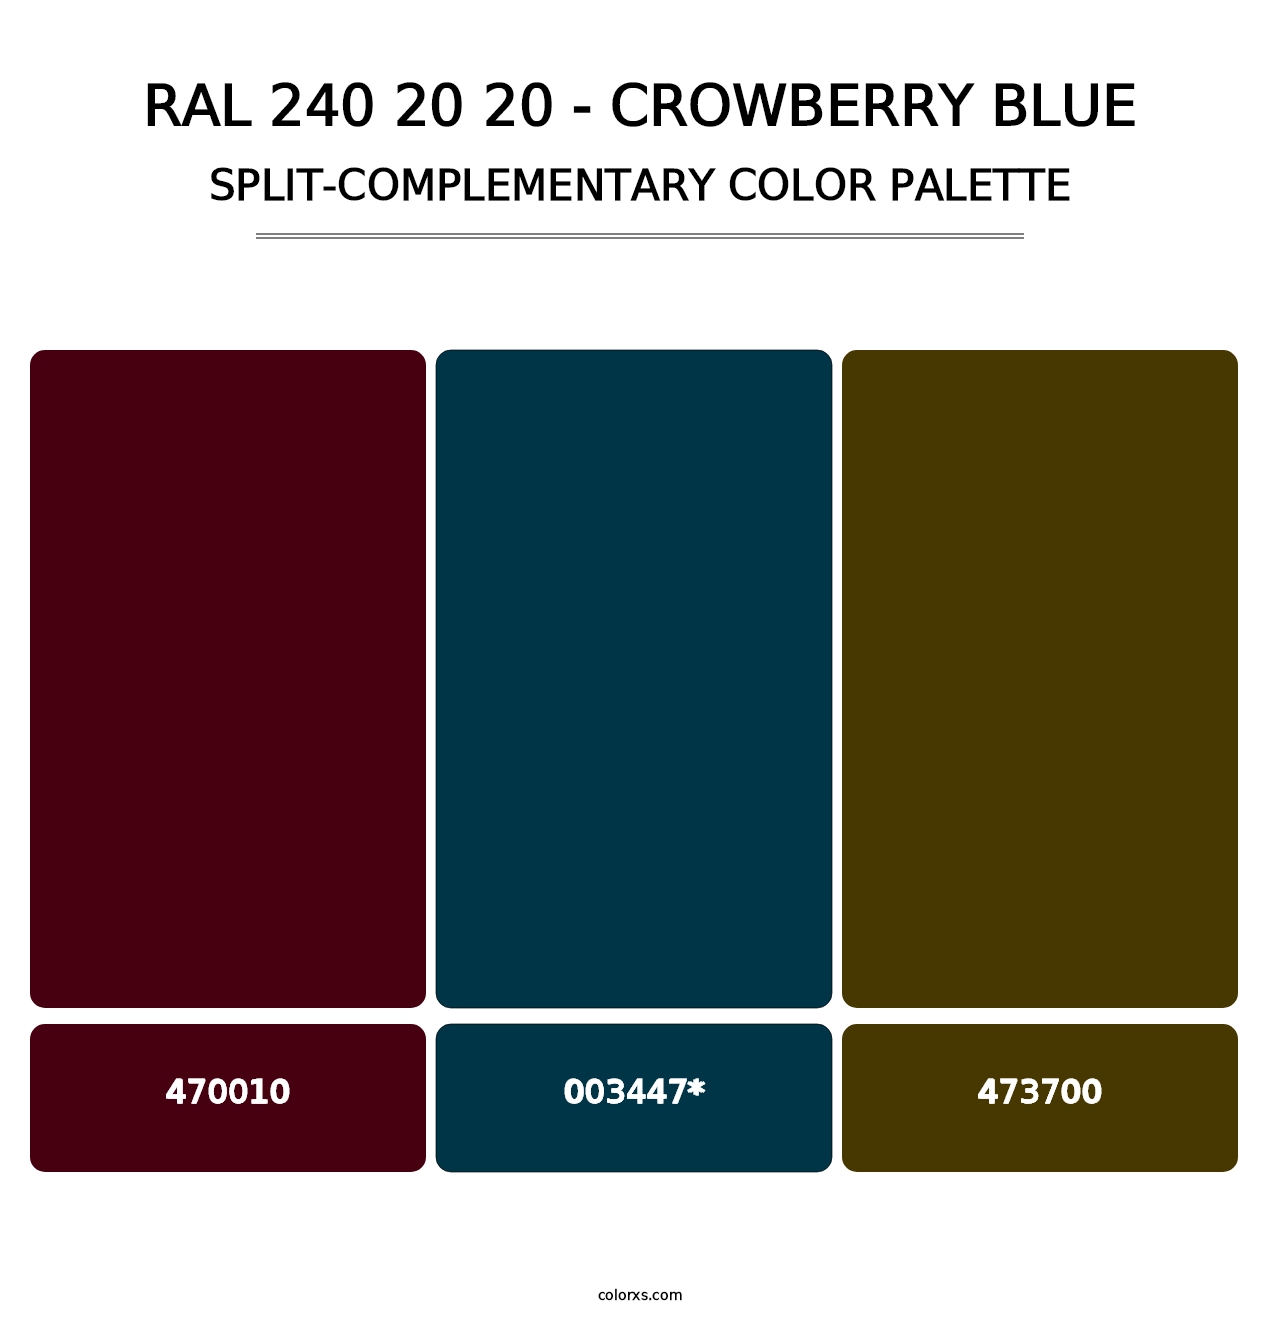 RAL 240 20 20 - Crowberry Blue - Split-Complementary Color Palette